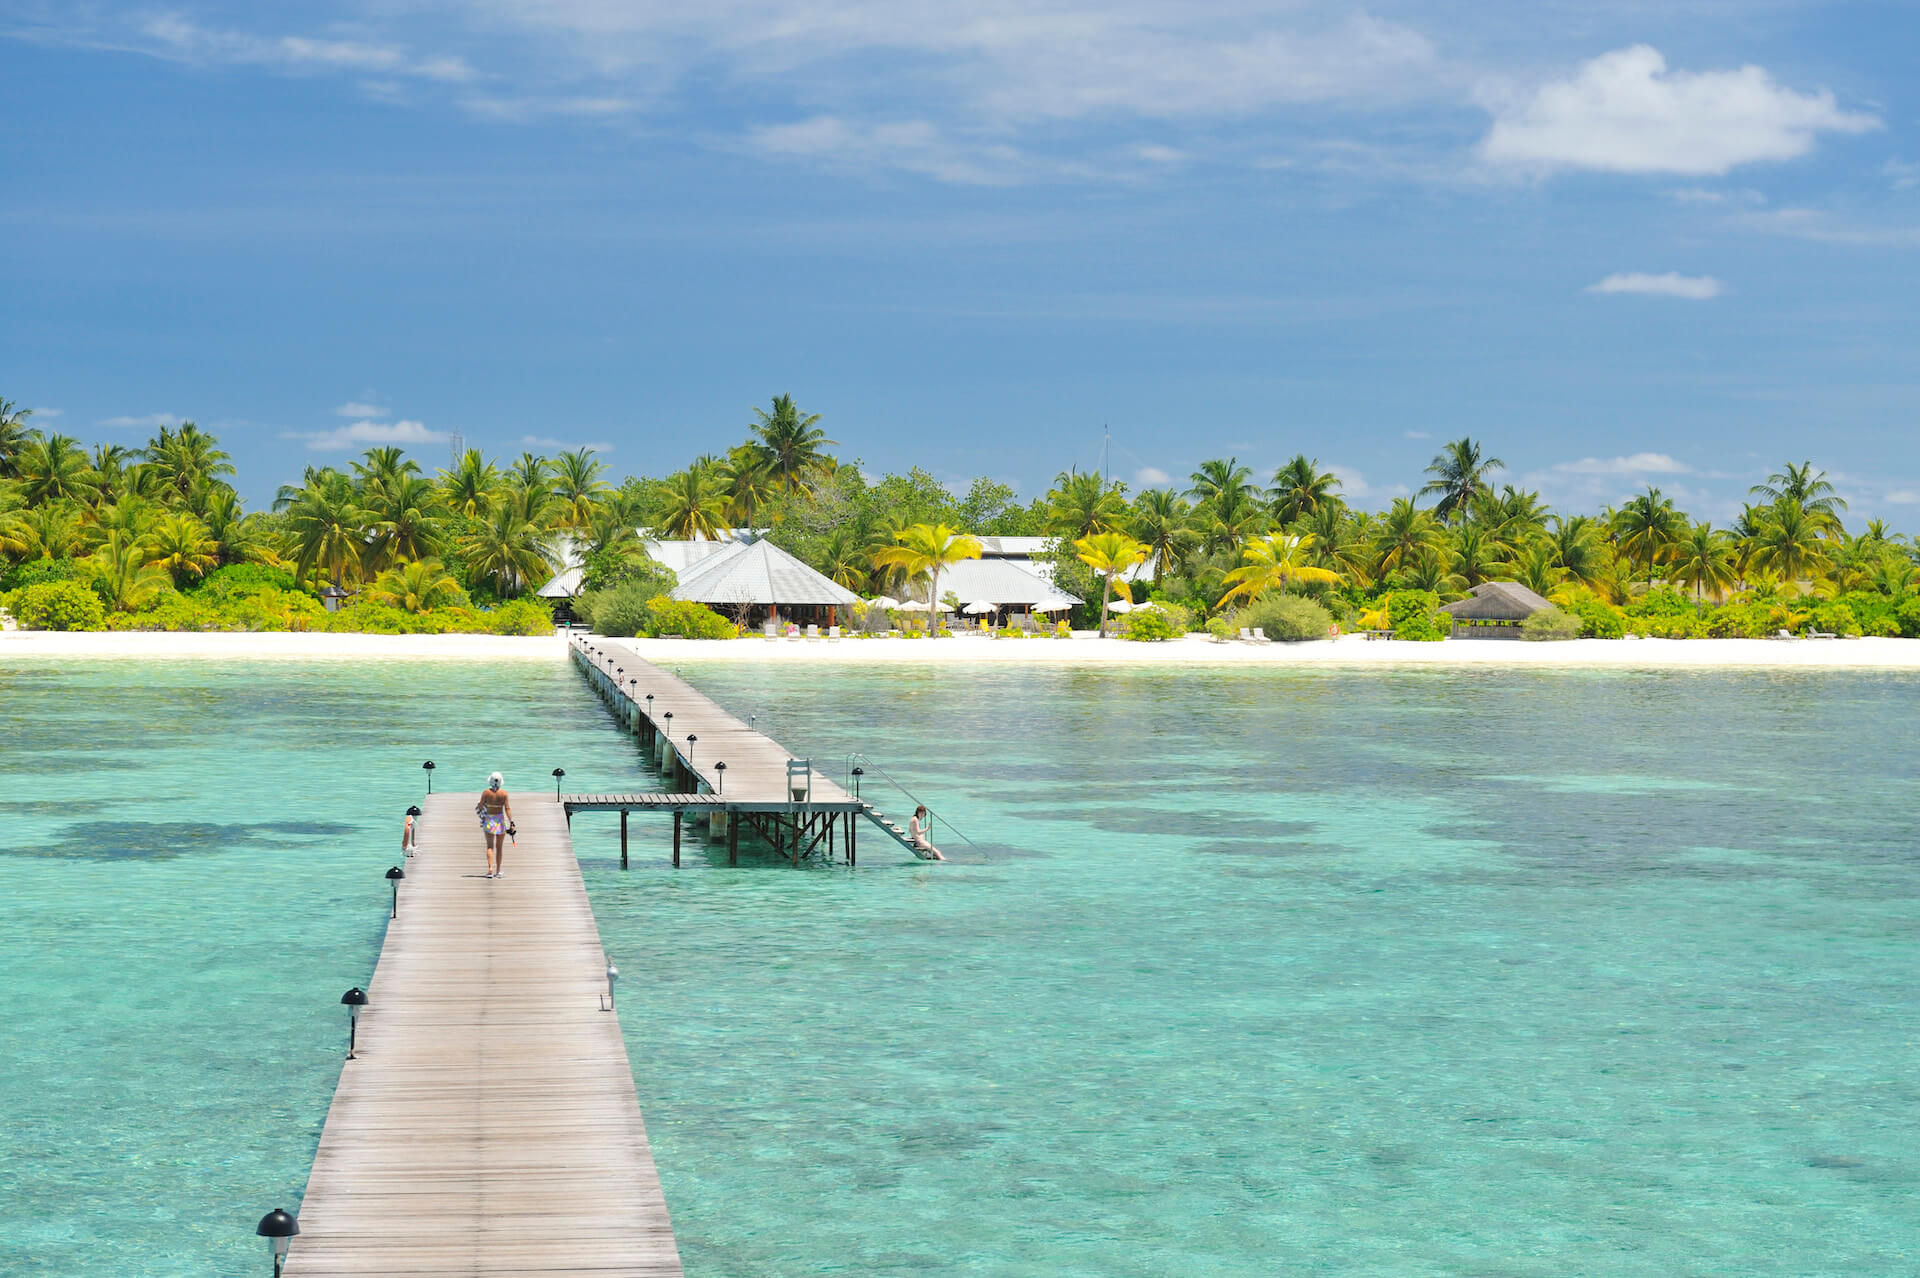 Island resort 3. Fun Island Resort 3 Мальдивы. Южный Мале Атолл. Мальдивы Южный Мале. Южный Атол остров Мальдивы.